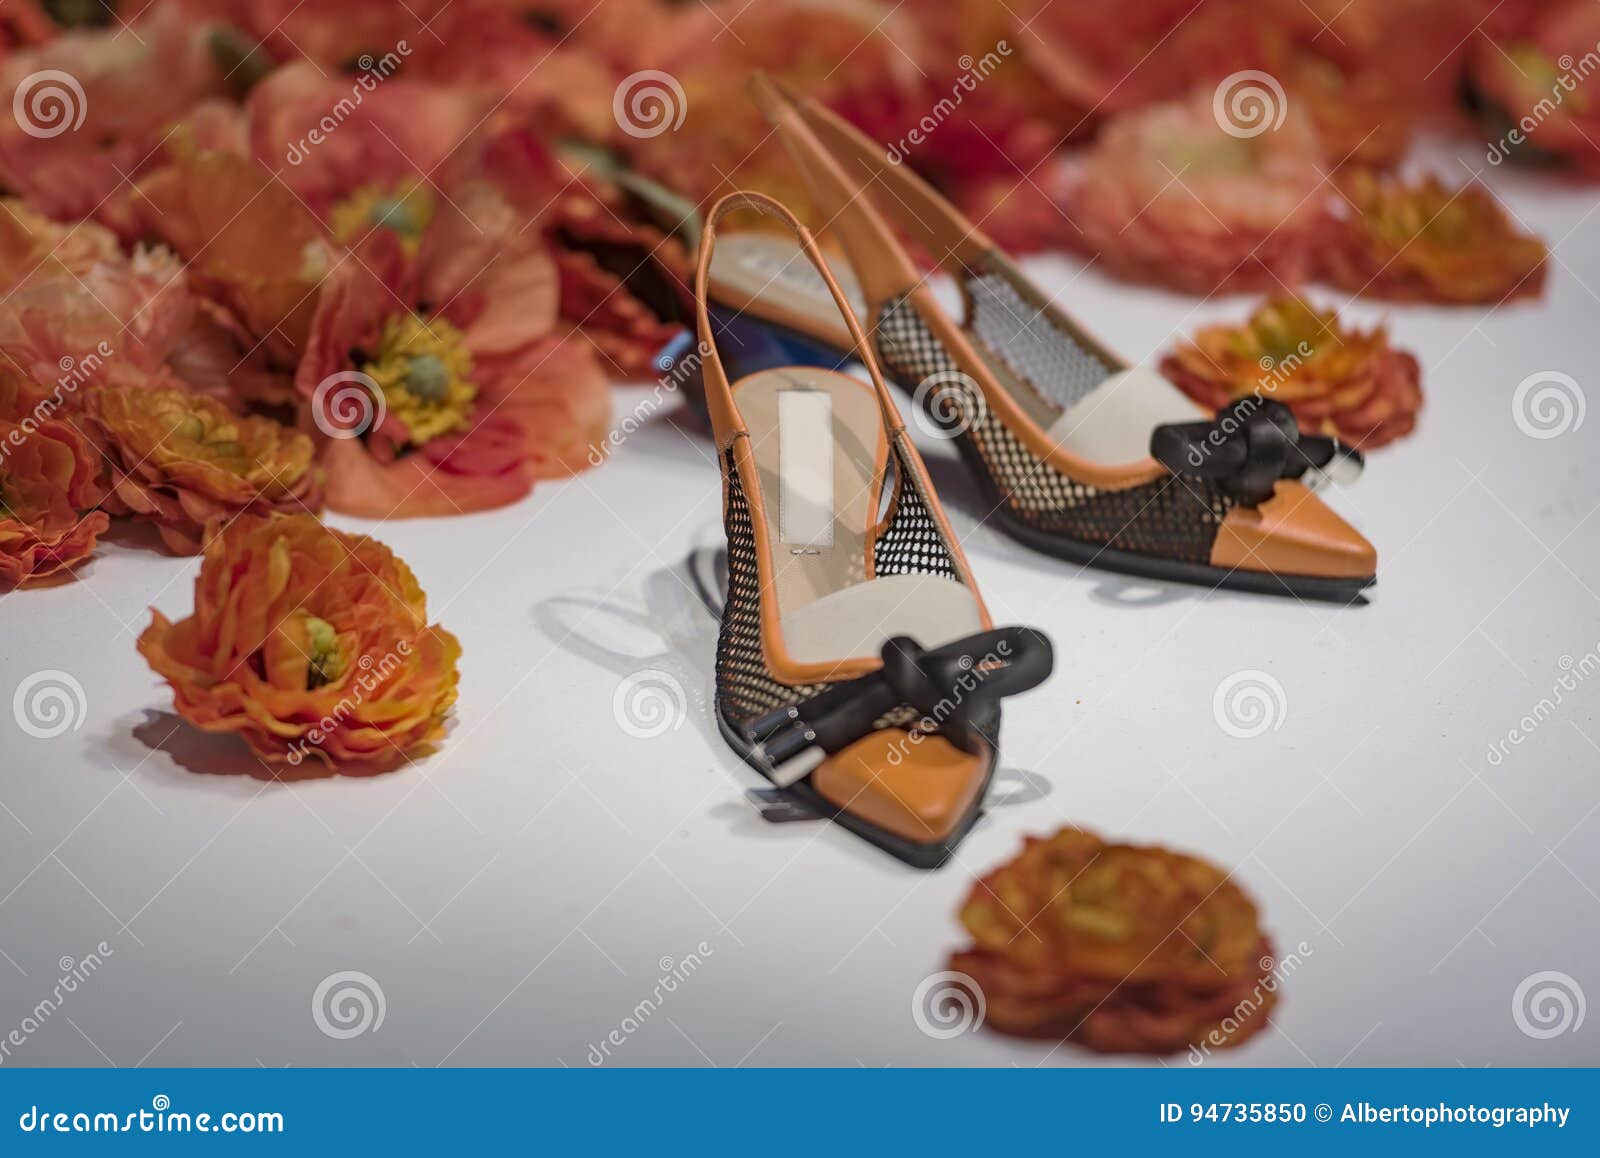 Fancy shoes stock photo. Image of celebration, closeup - 94735850